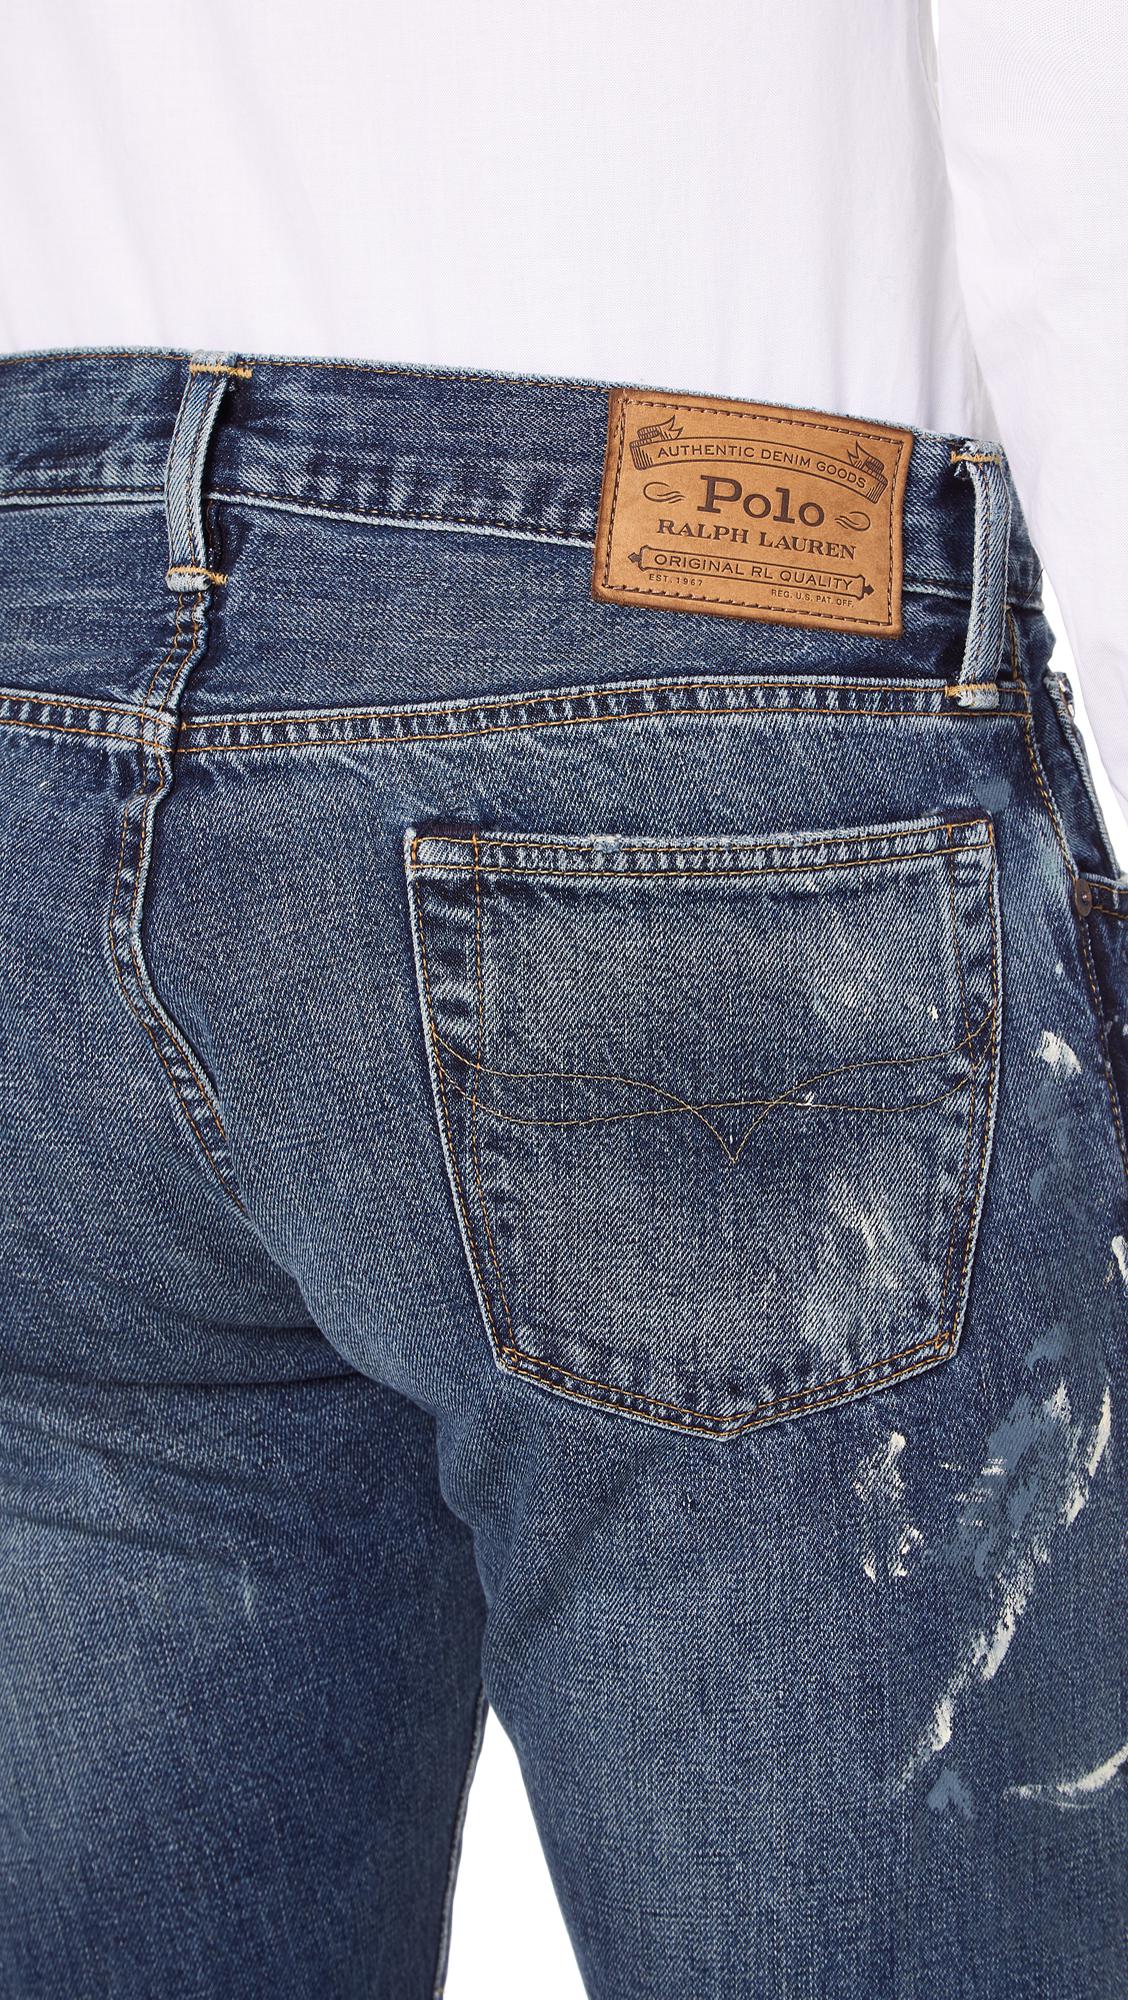 Polo Ralph Jeans Size Chart